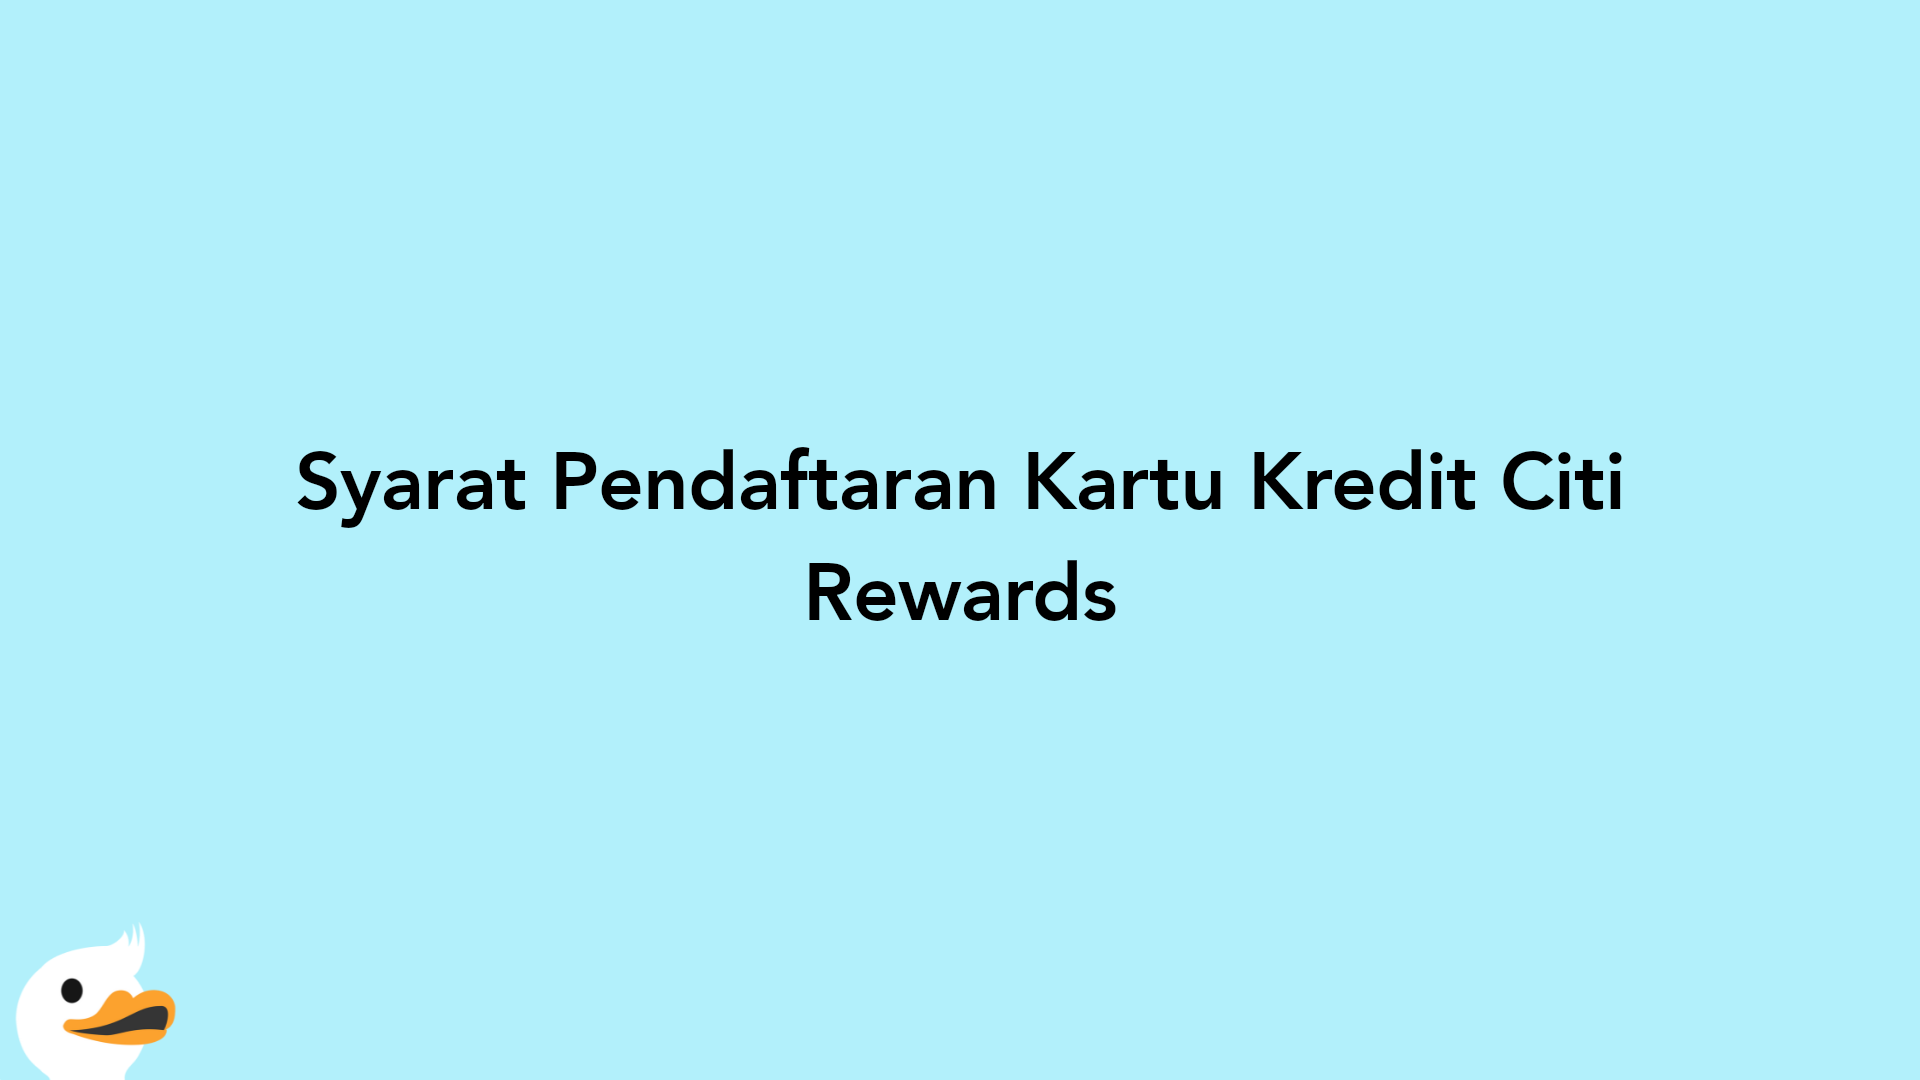 Syarat Pendaftaran Kartu Kredit Citi Rewards